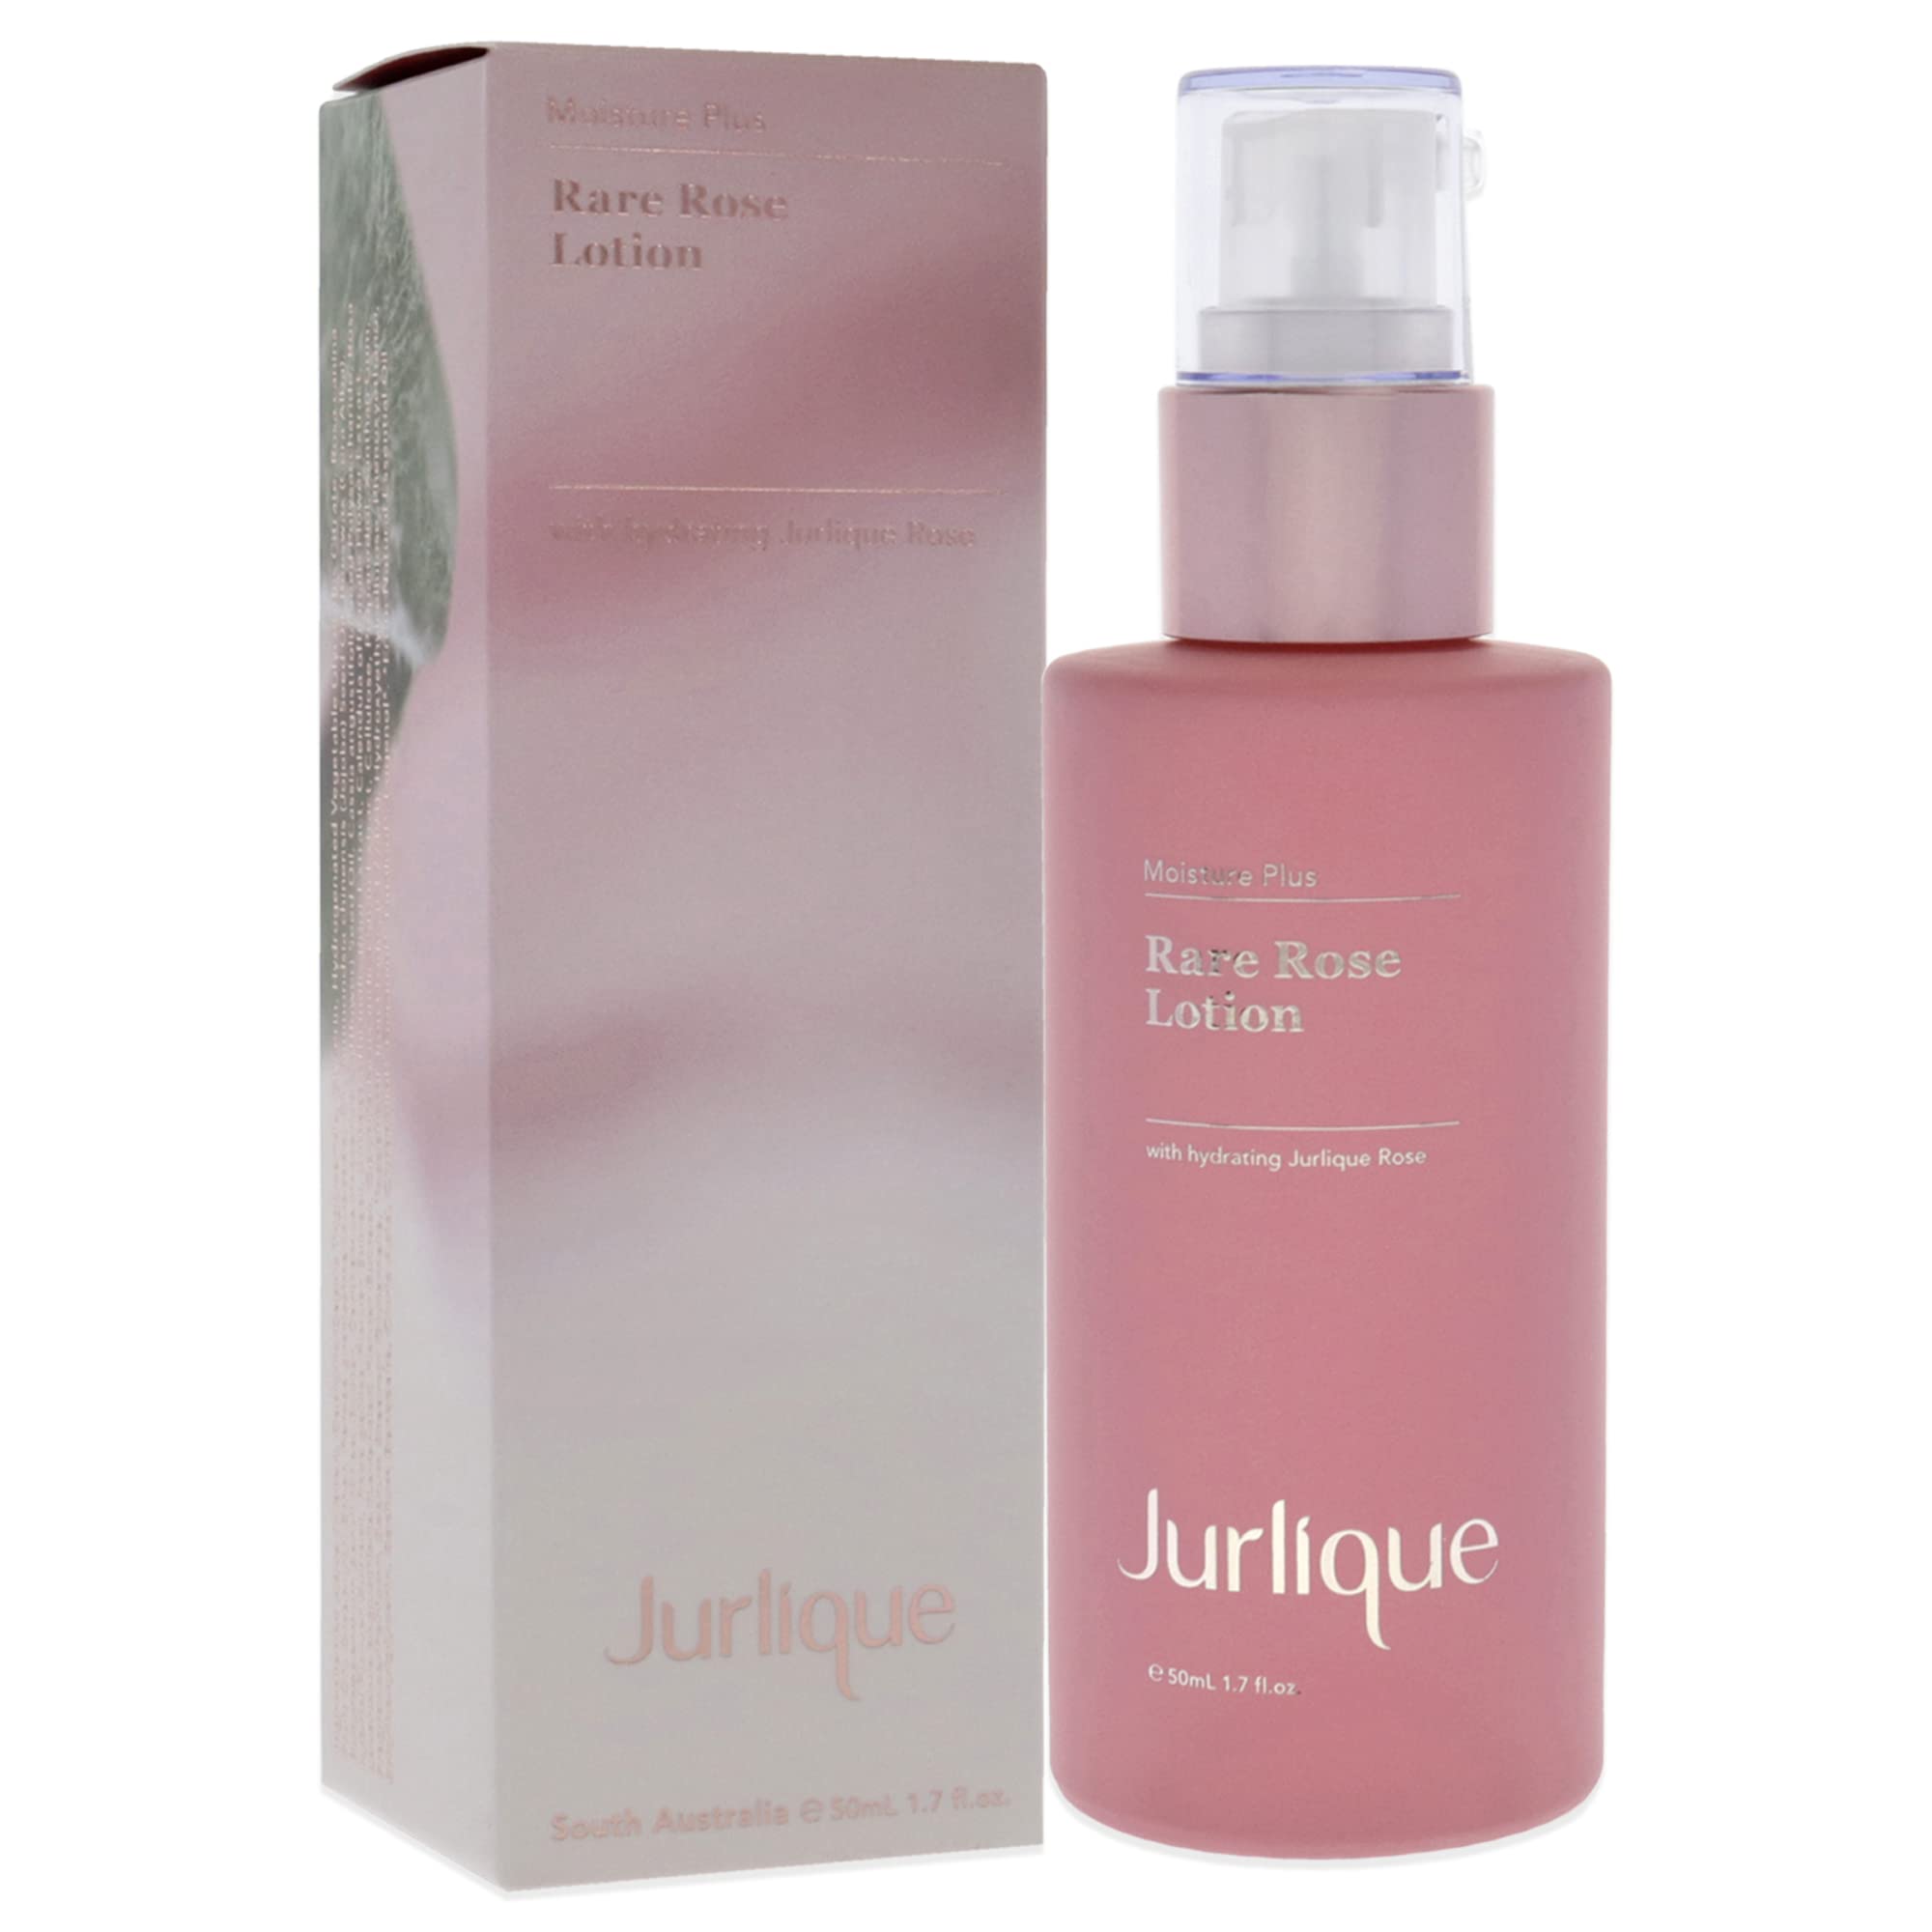 Jurlique Moisture Plus Rare Rose Lotion Facial Moisturizer Face Cream